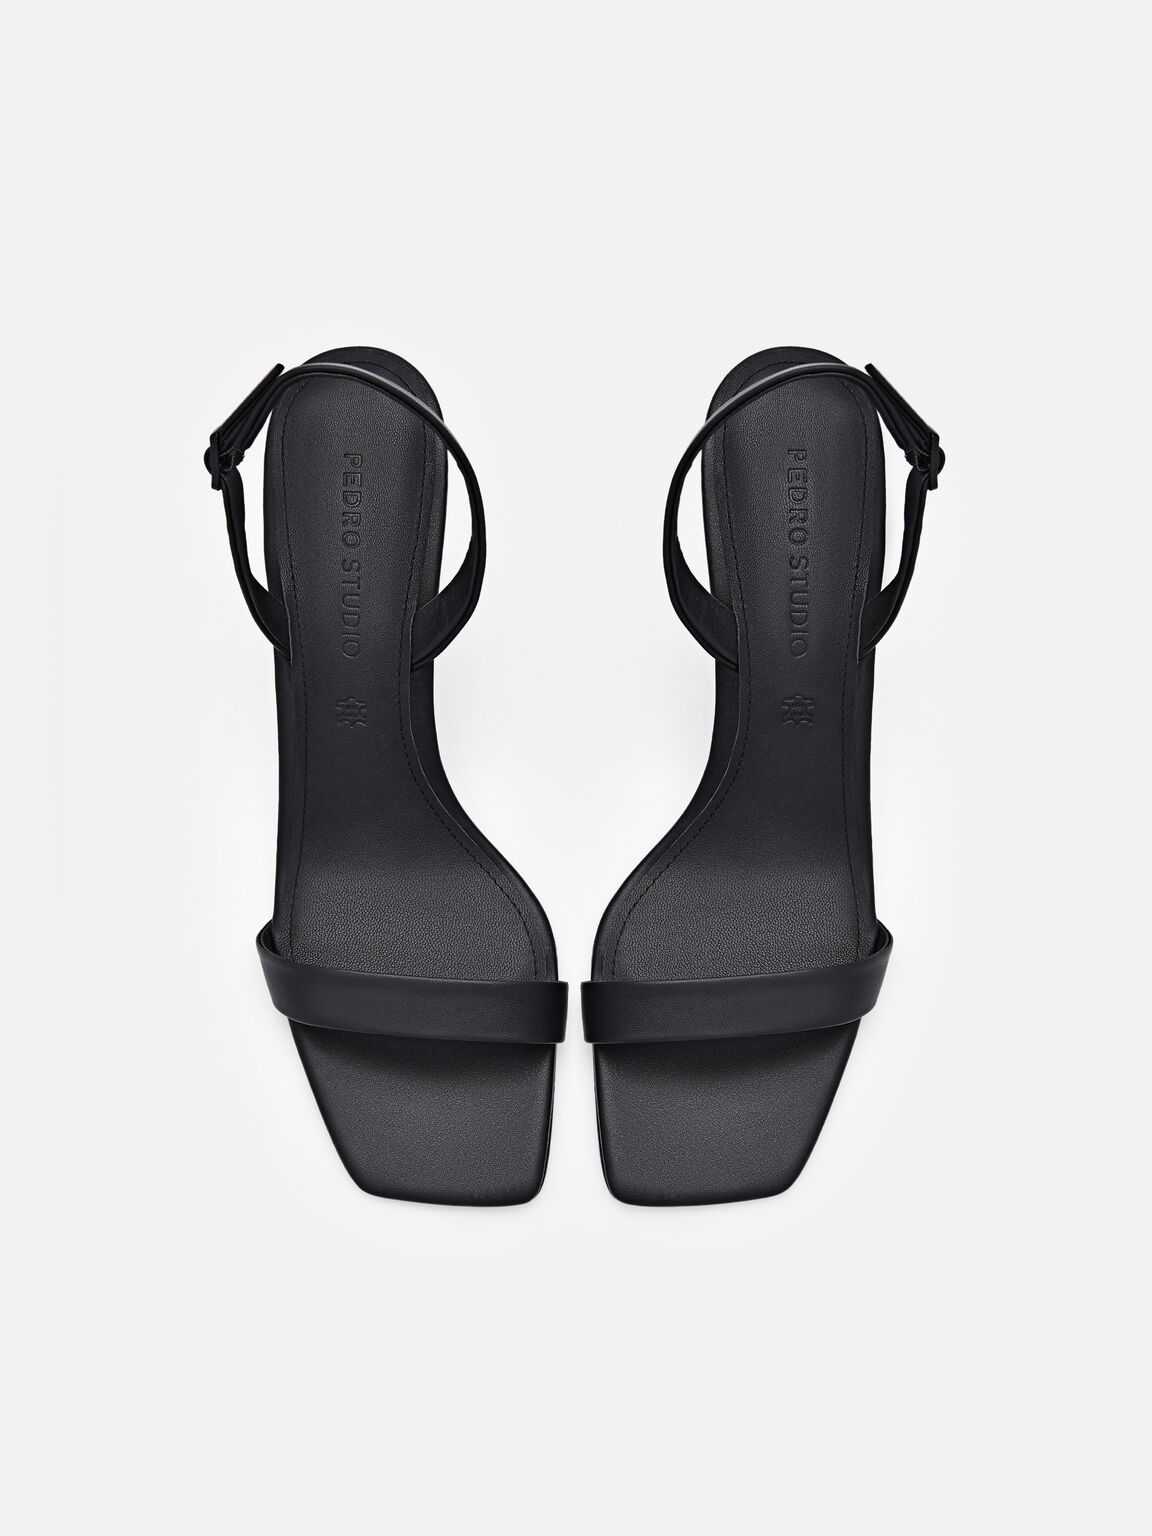 Giày sandals cao gót mũi vuông Studio Mel Leather, Đen, hi-res